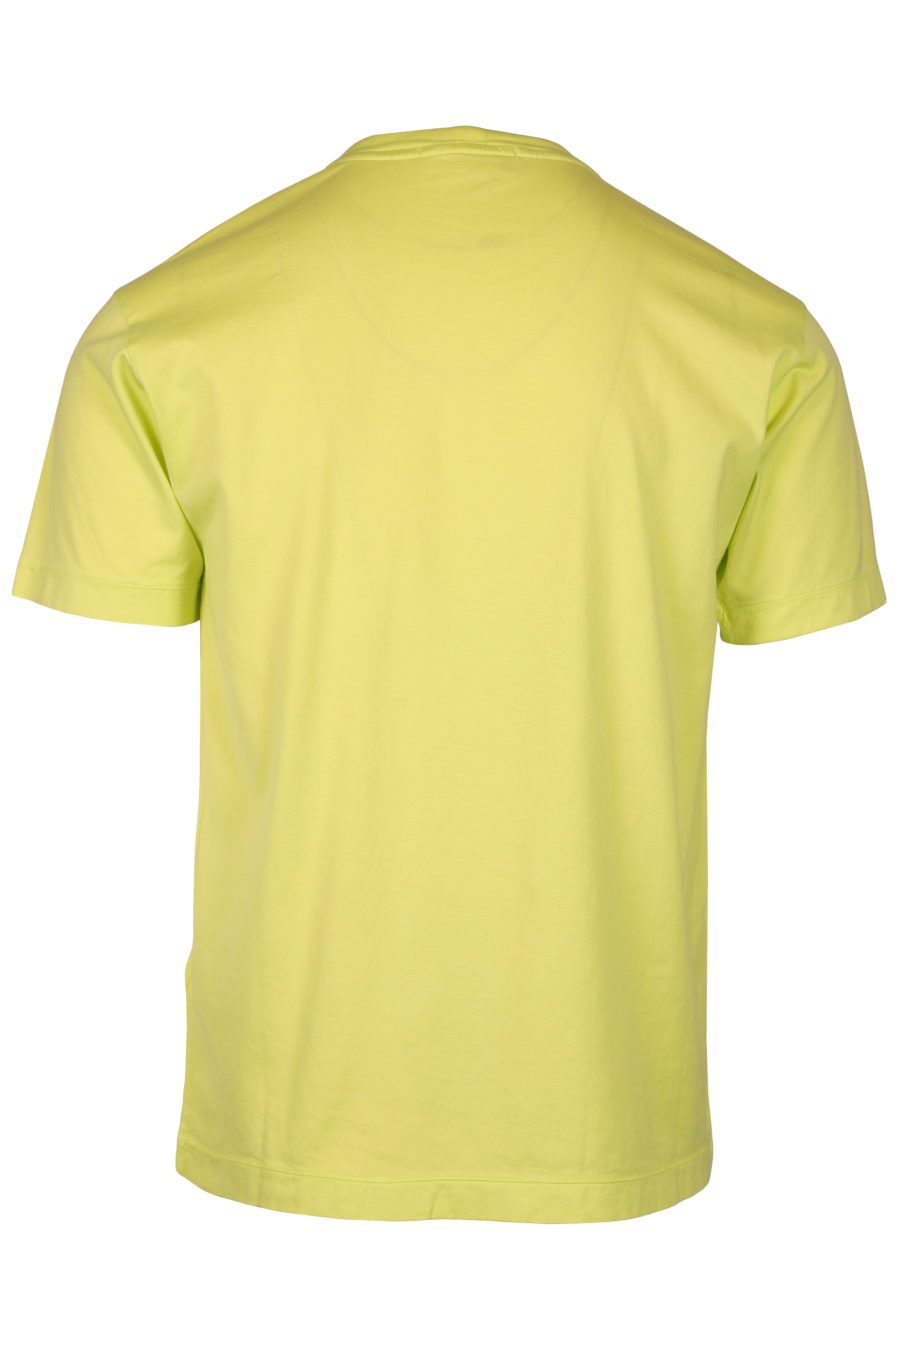 Camiseta de color lima neón con parche - IMG 2531